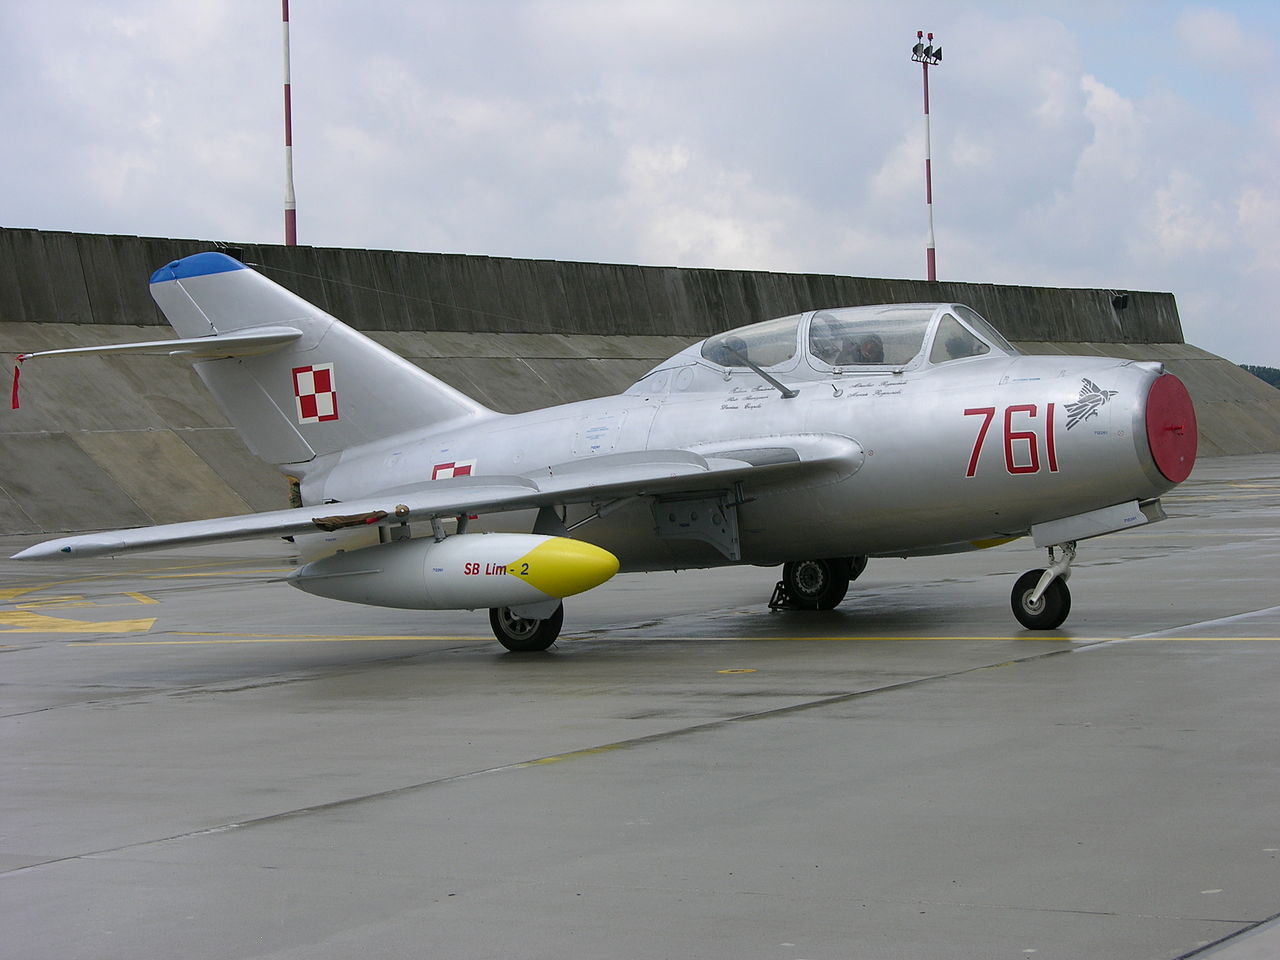 File:761 a MiG-15UTI preserved at Poznan-Krzesiny (3118035907).jpg -  Wikimedia Commons